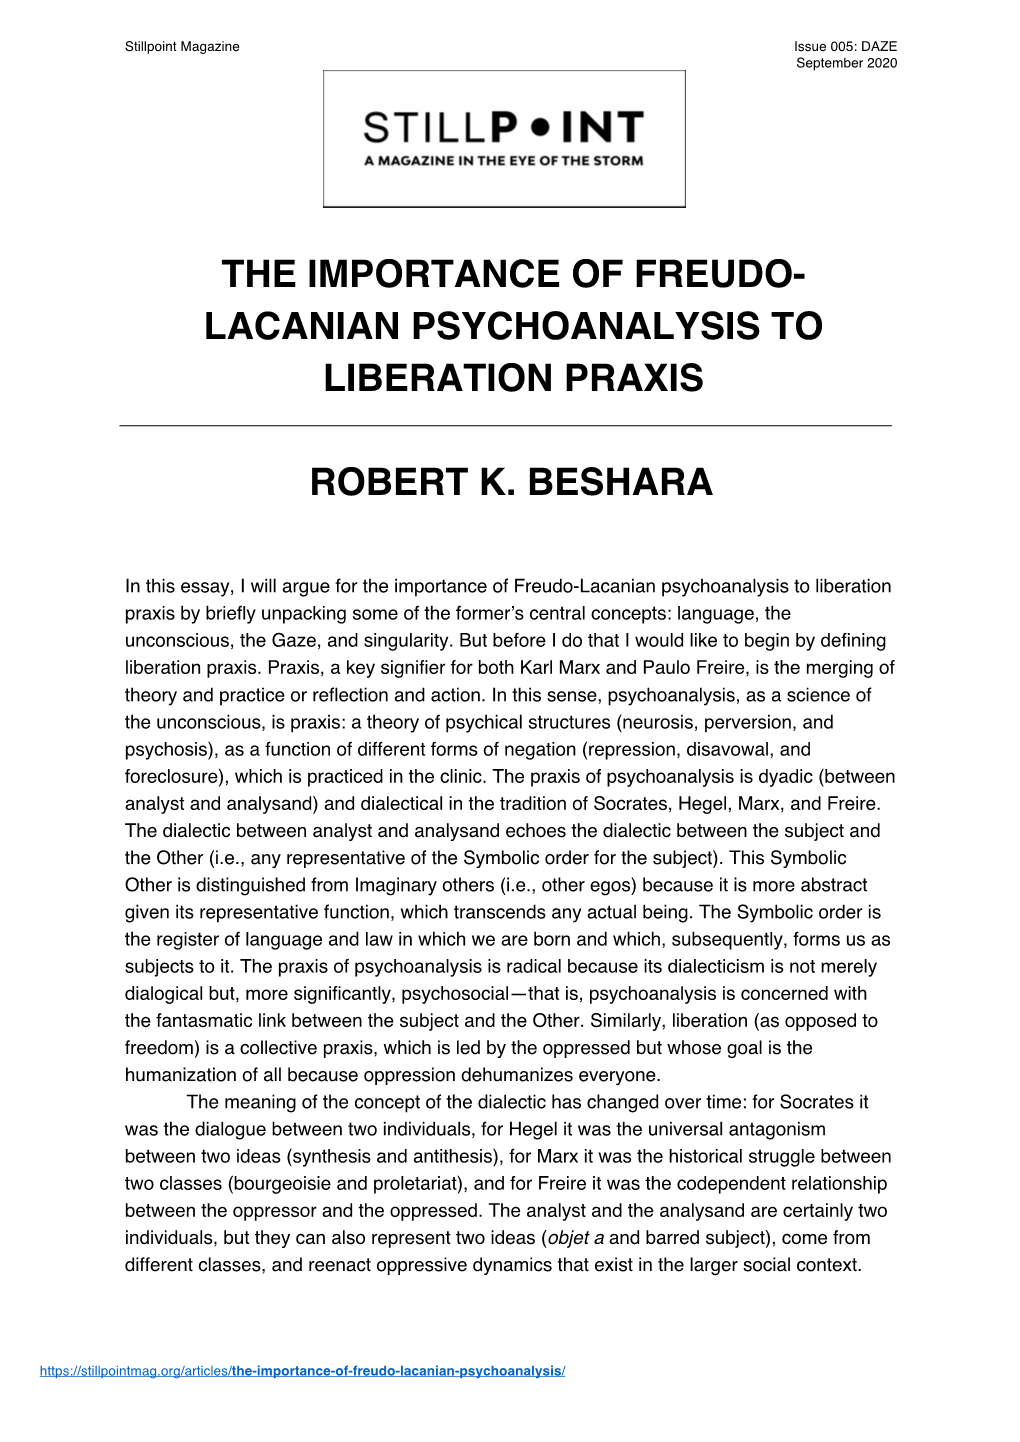 Lacanian Psychoanalysis to Liberation Praxis Robert K. Beshara